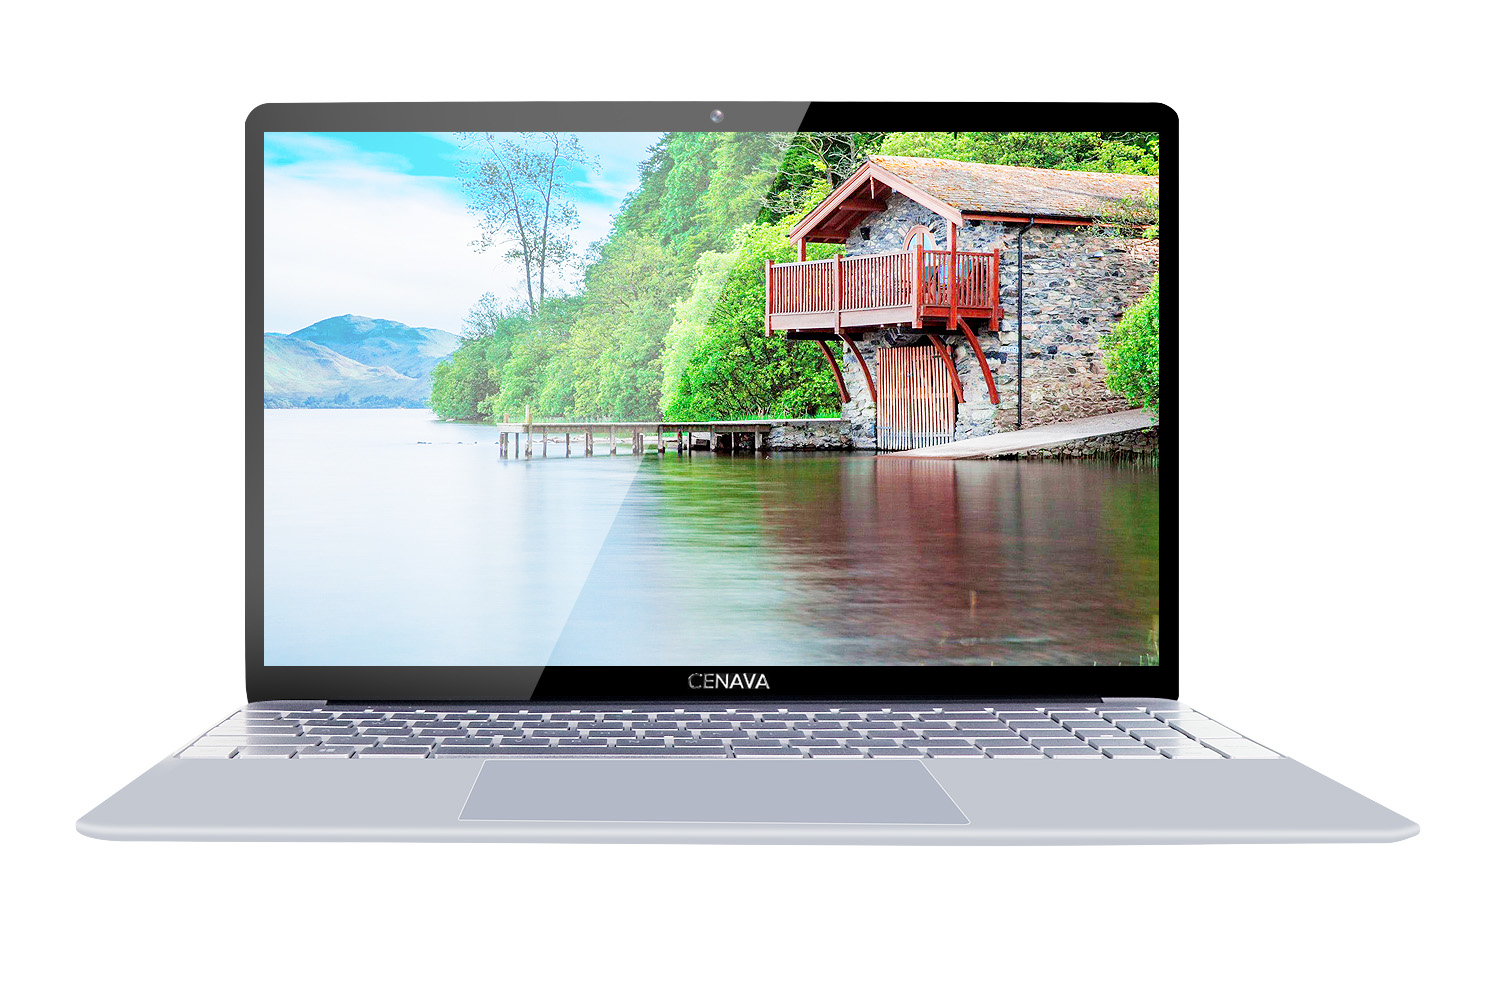 

CENAVA F151 Laptop15.6 inch Intel Core J3455 Intel HD Graphics 500 Win10 8G RAM 256GB SSD Notebook TN Screen